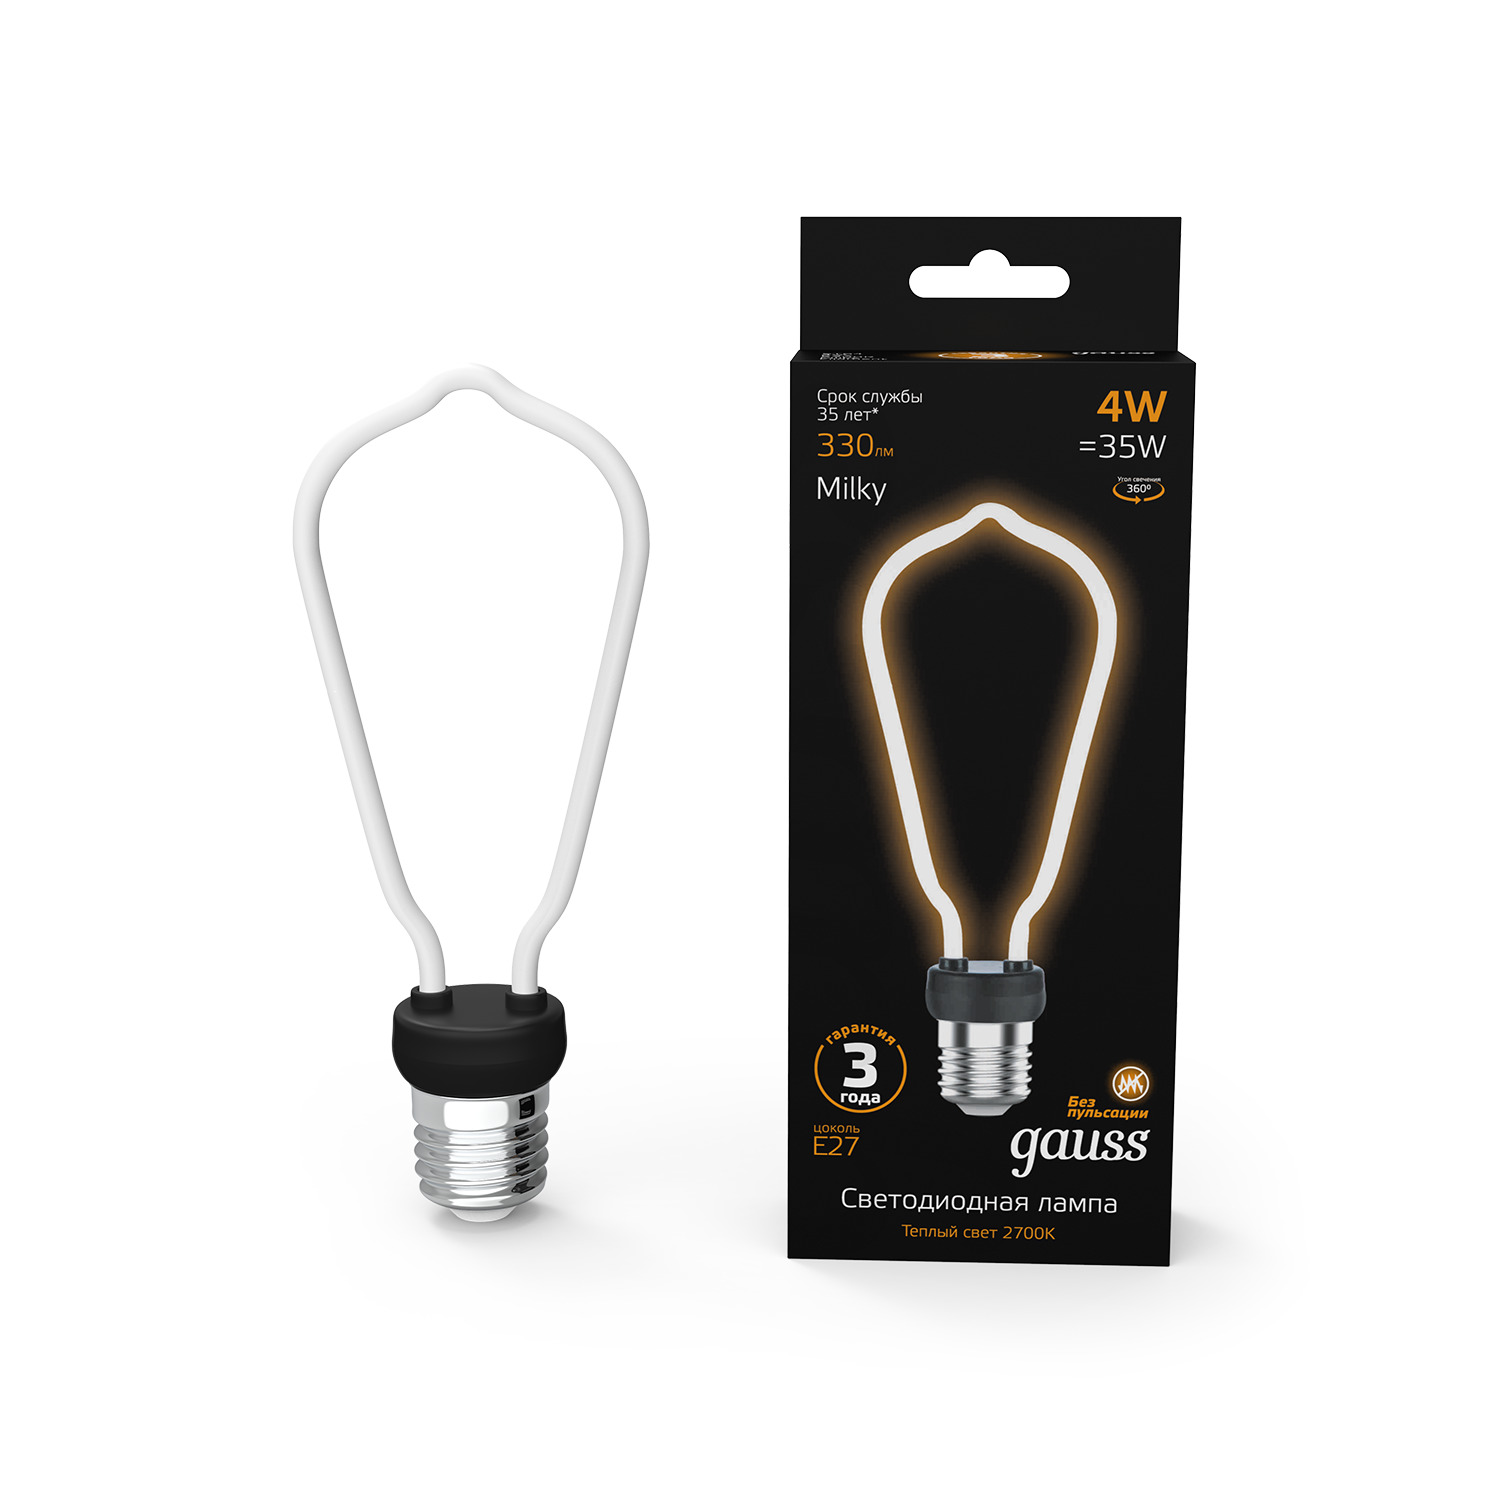 Лампа Gauss LED Filament Bulbless ST64 Milky E27 4W 330 Лм 2700K 64x165мм лампа gauss led filament bulbless ct35 milky e14 4w 330 лм 2700k 35x150мм